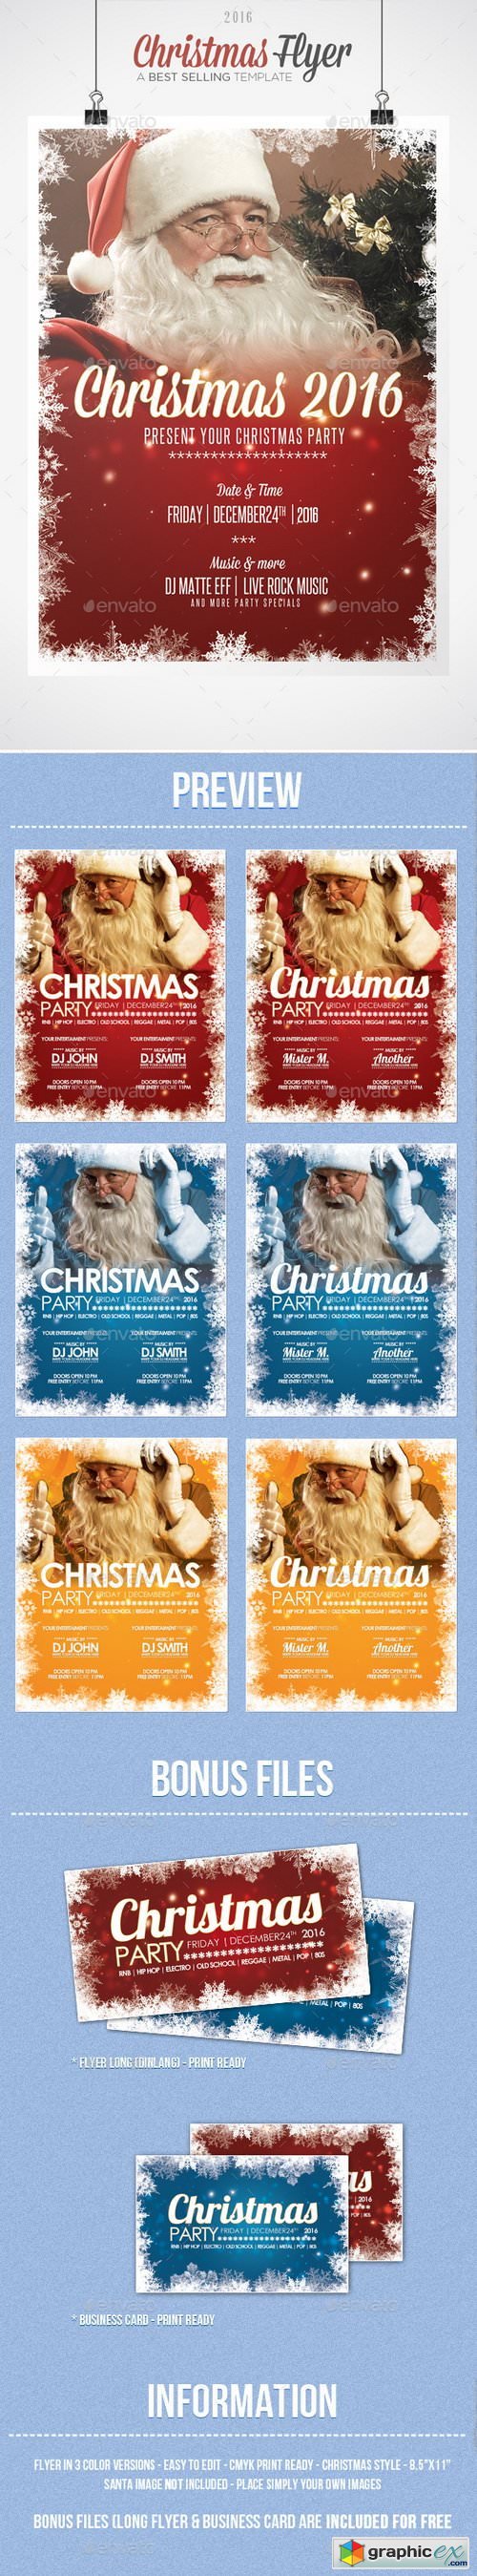 Christmas Flyer Template 553296